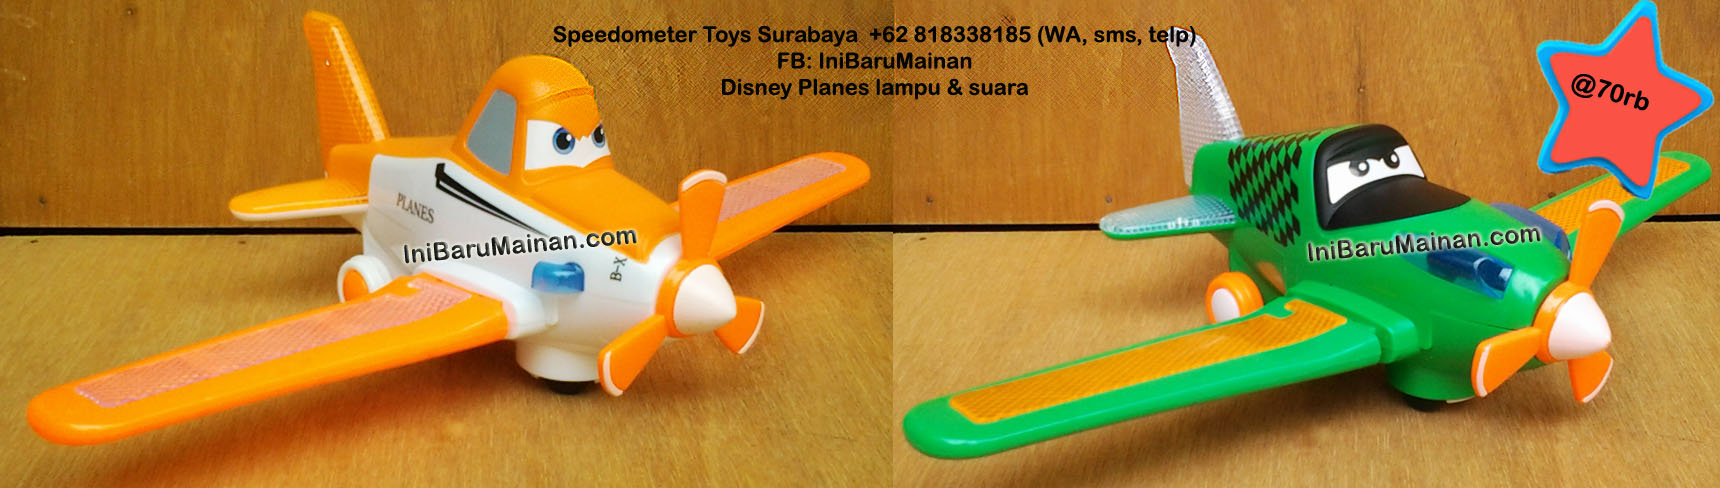 Speedometer Toys  Jual Mainan Anak Surabaya, Jual Mainan 